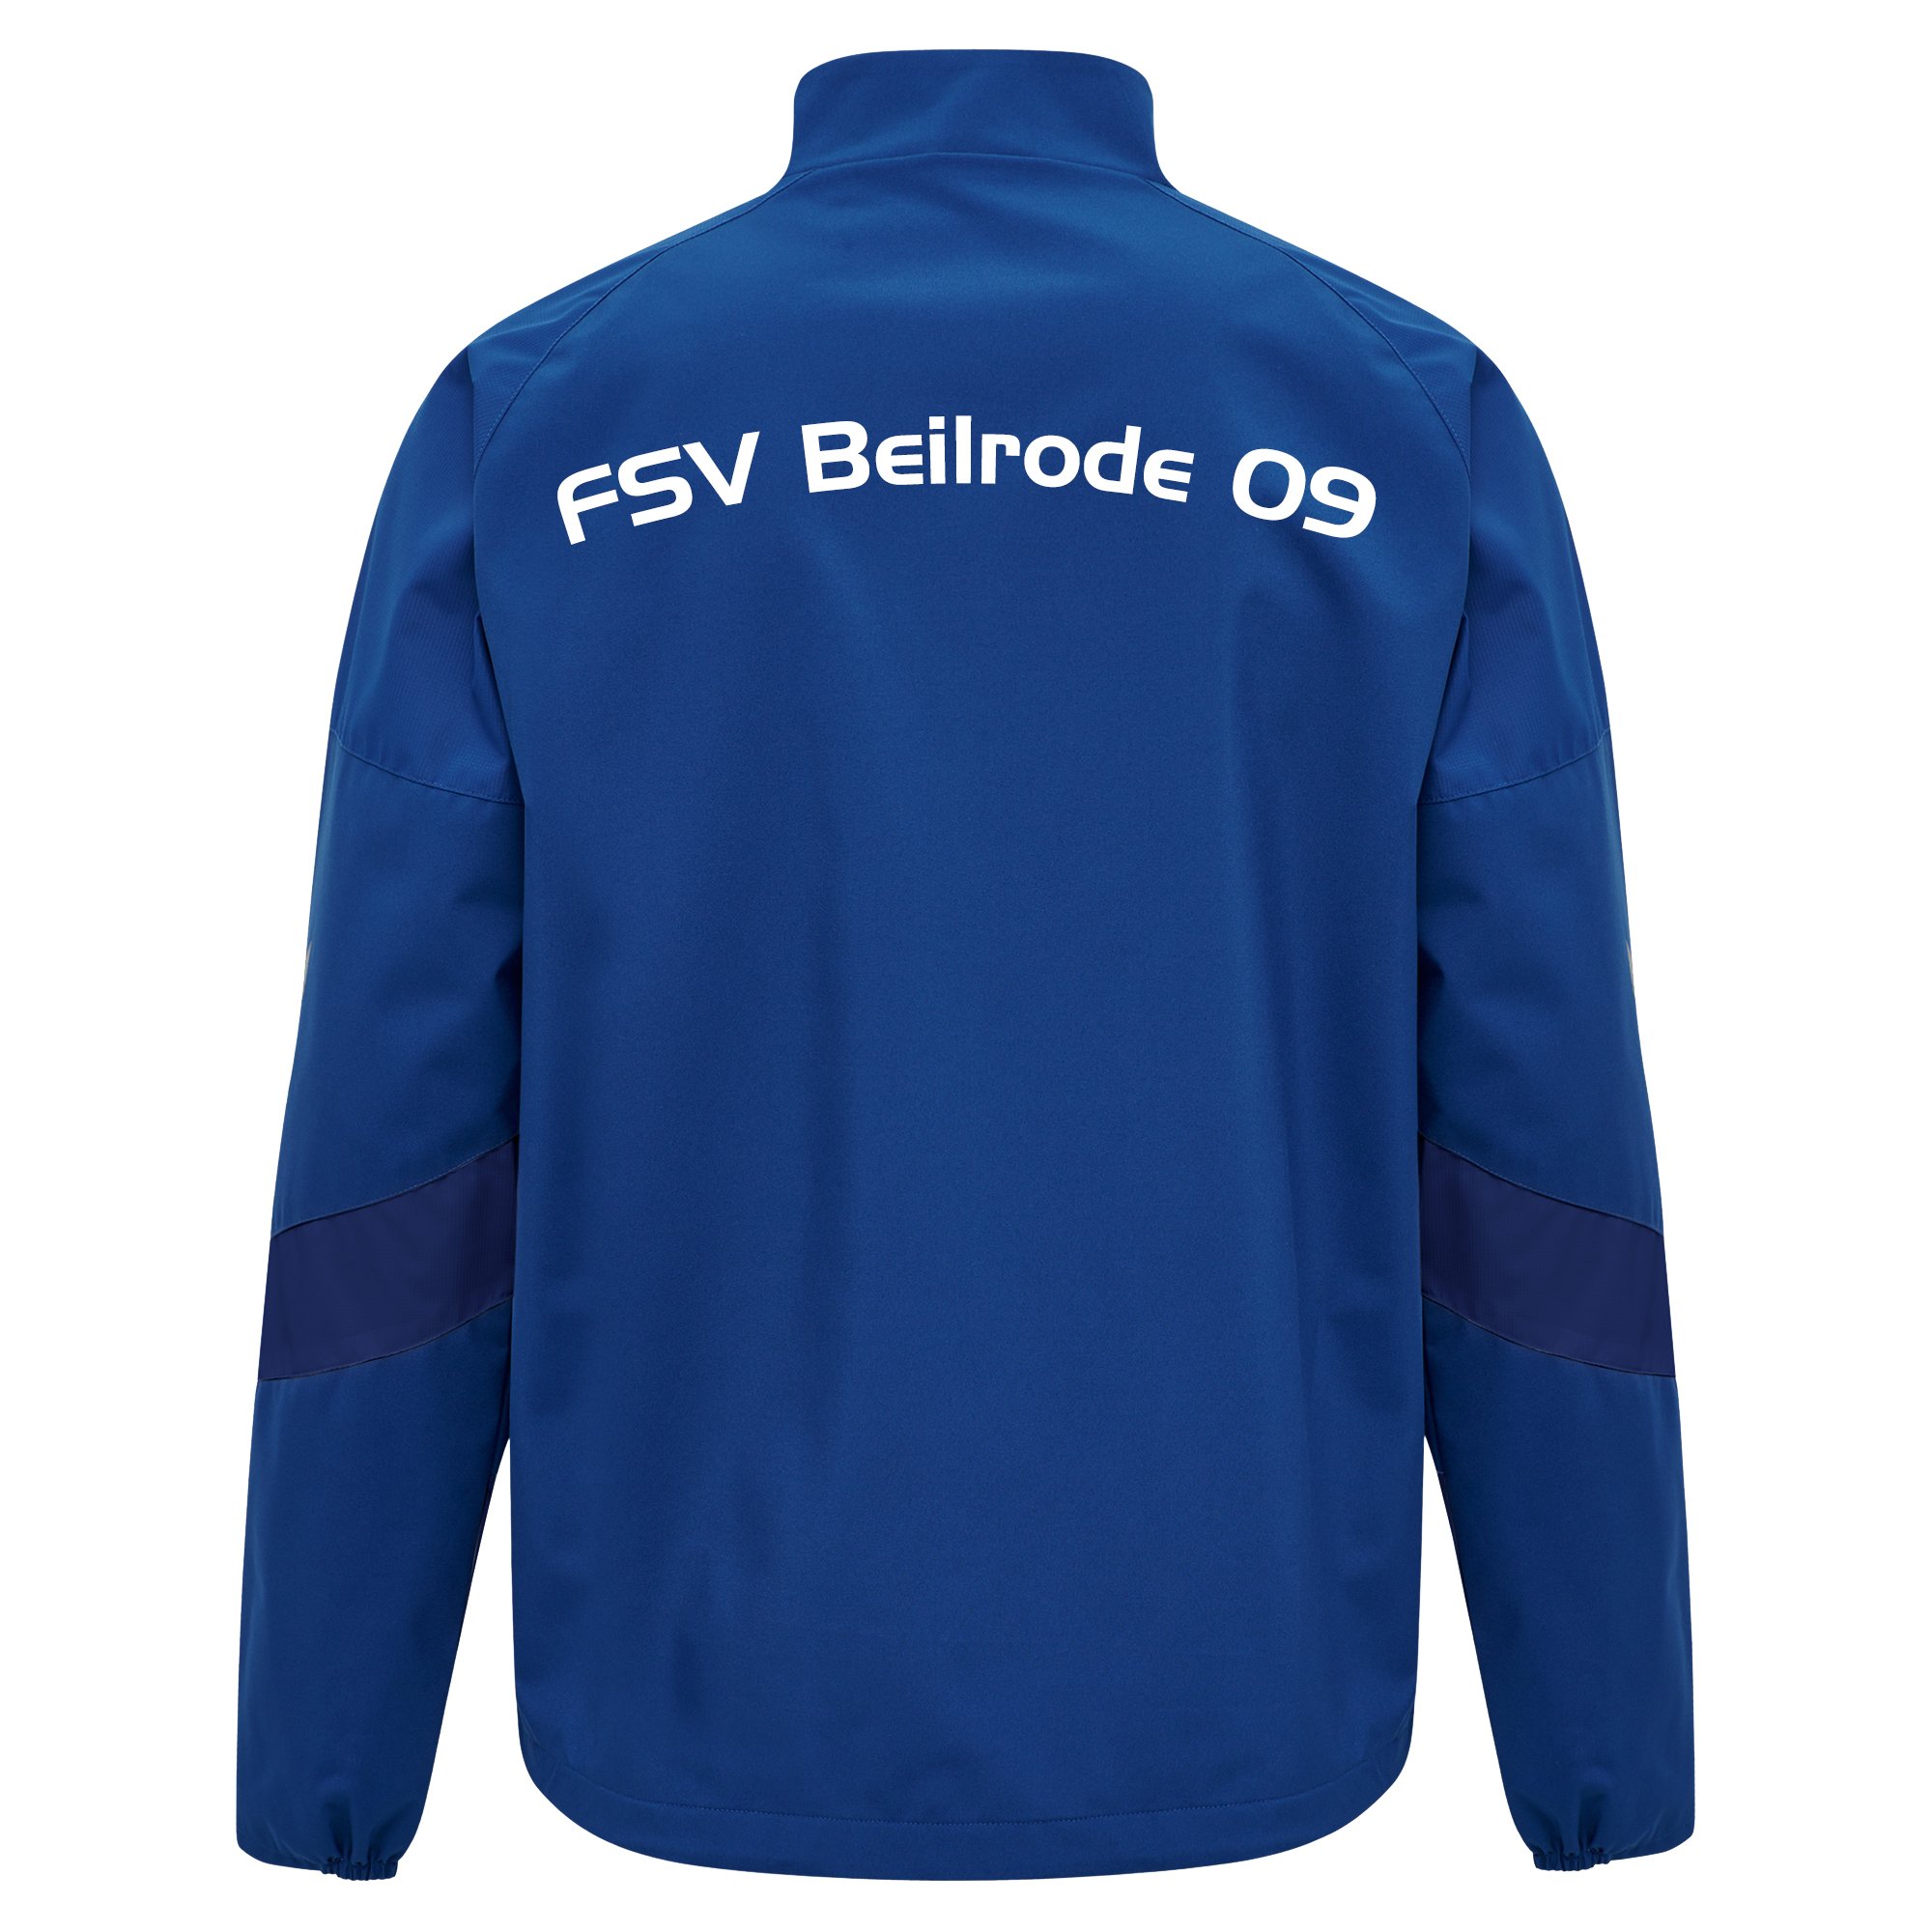 FSV Beilrode 09 Training Jacket